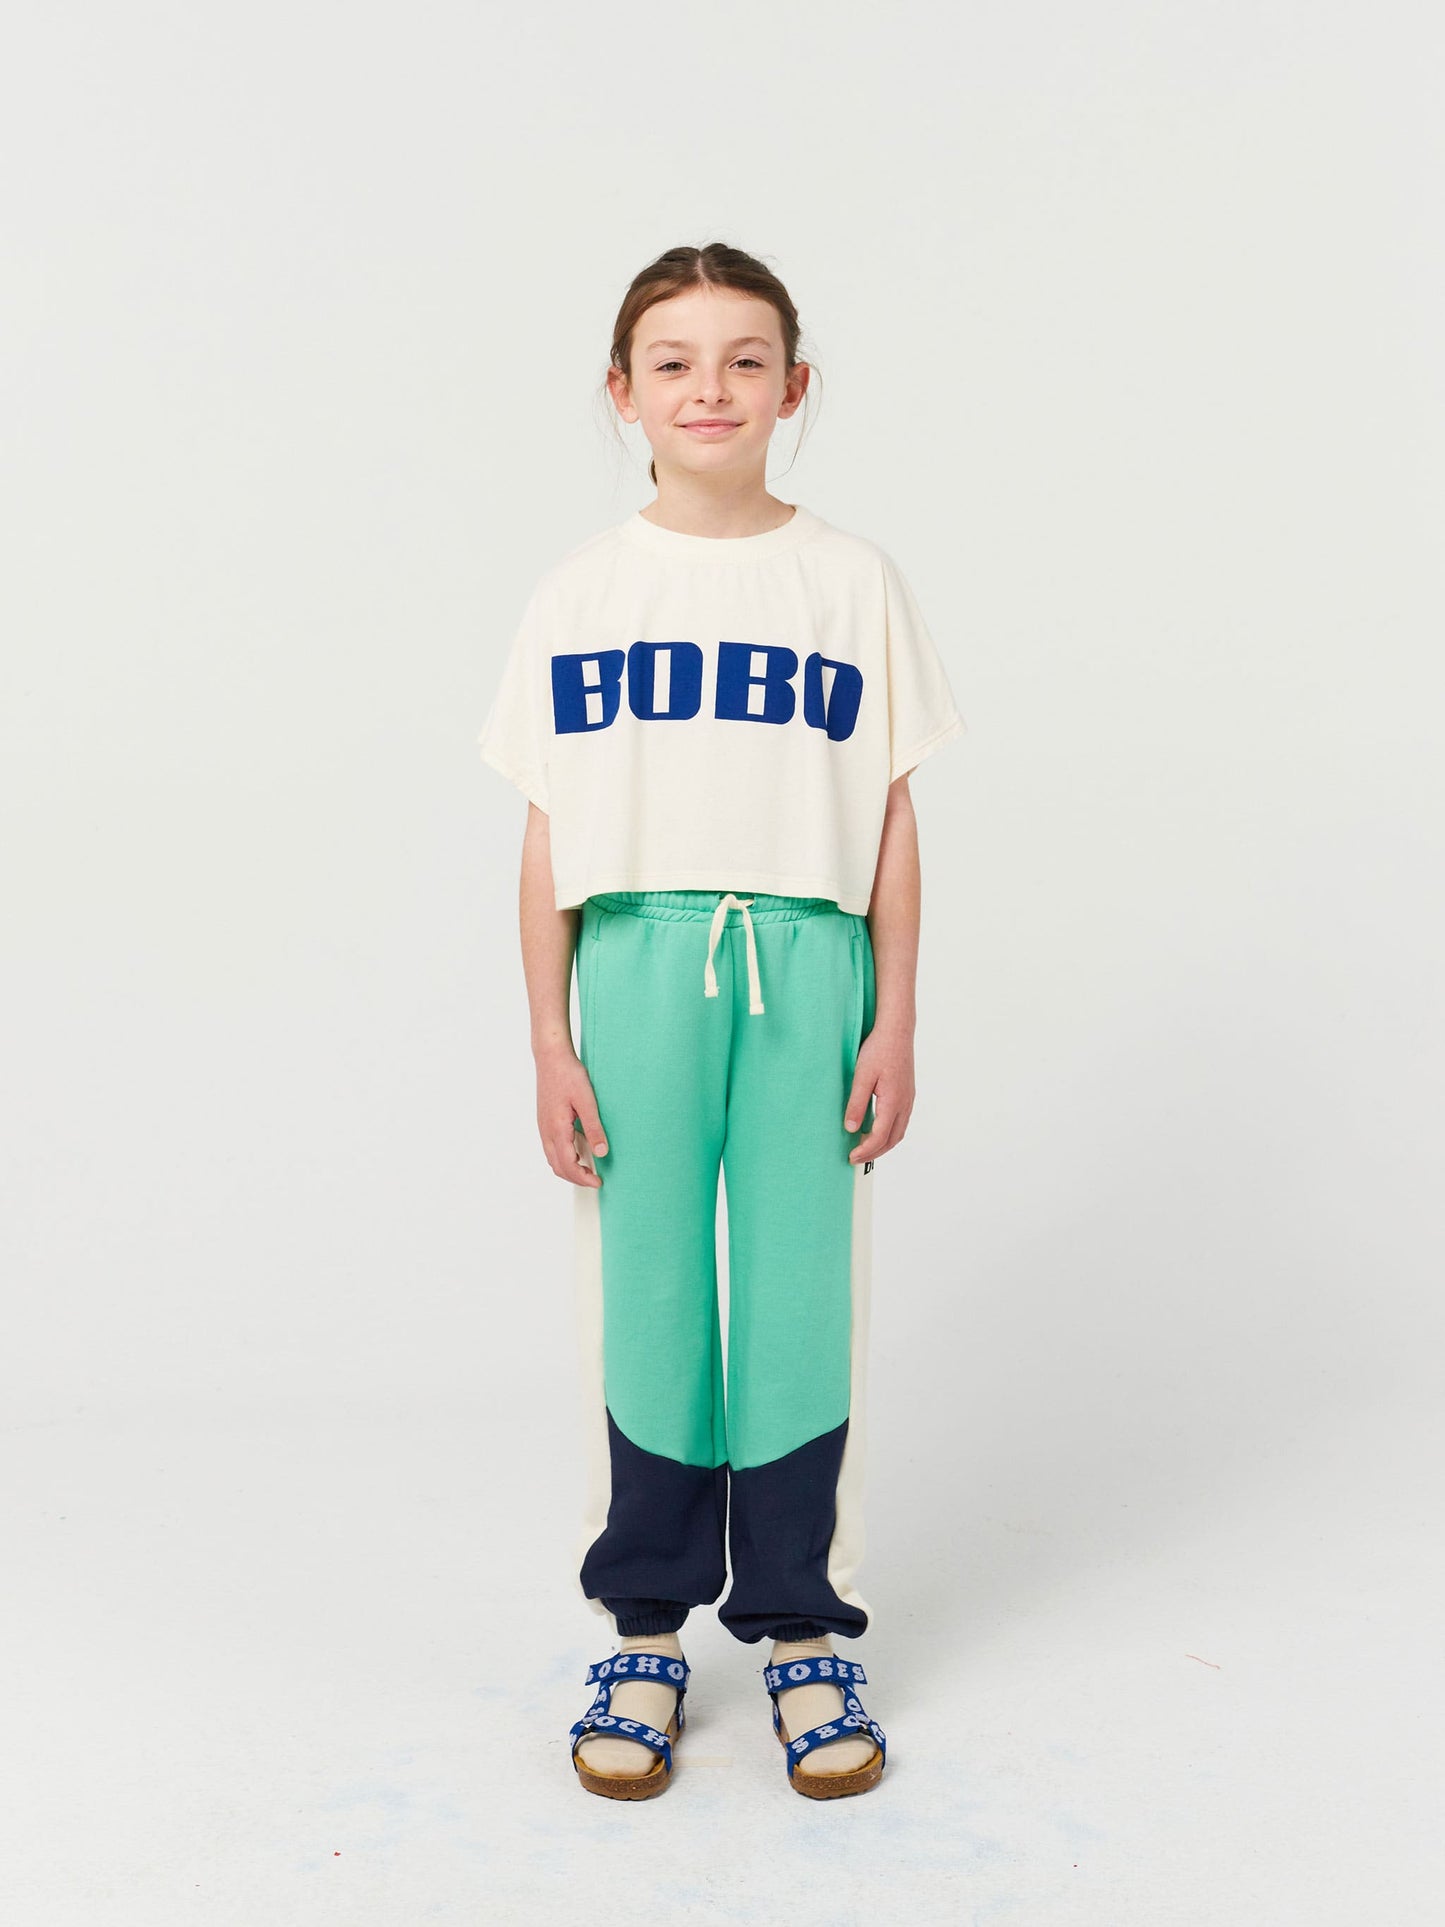 Camiseta Bobo estilo cropped